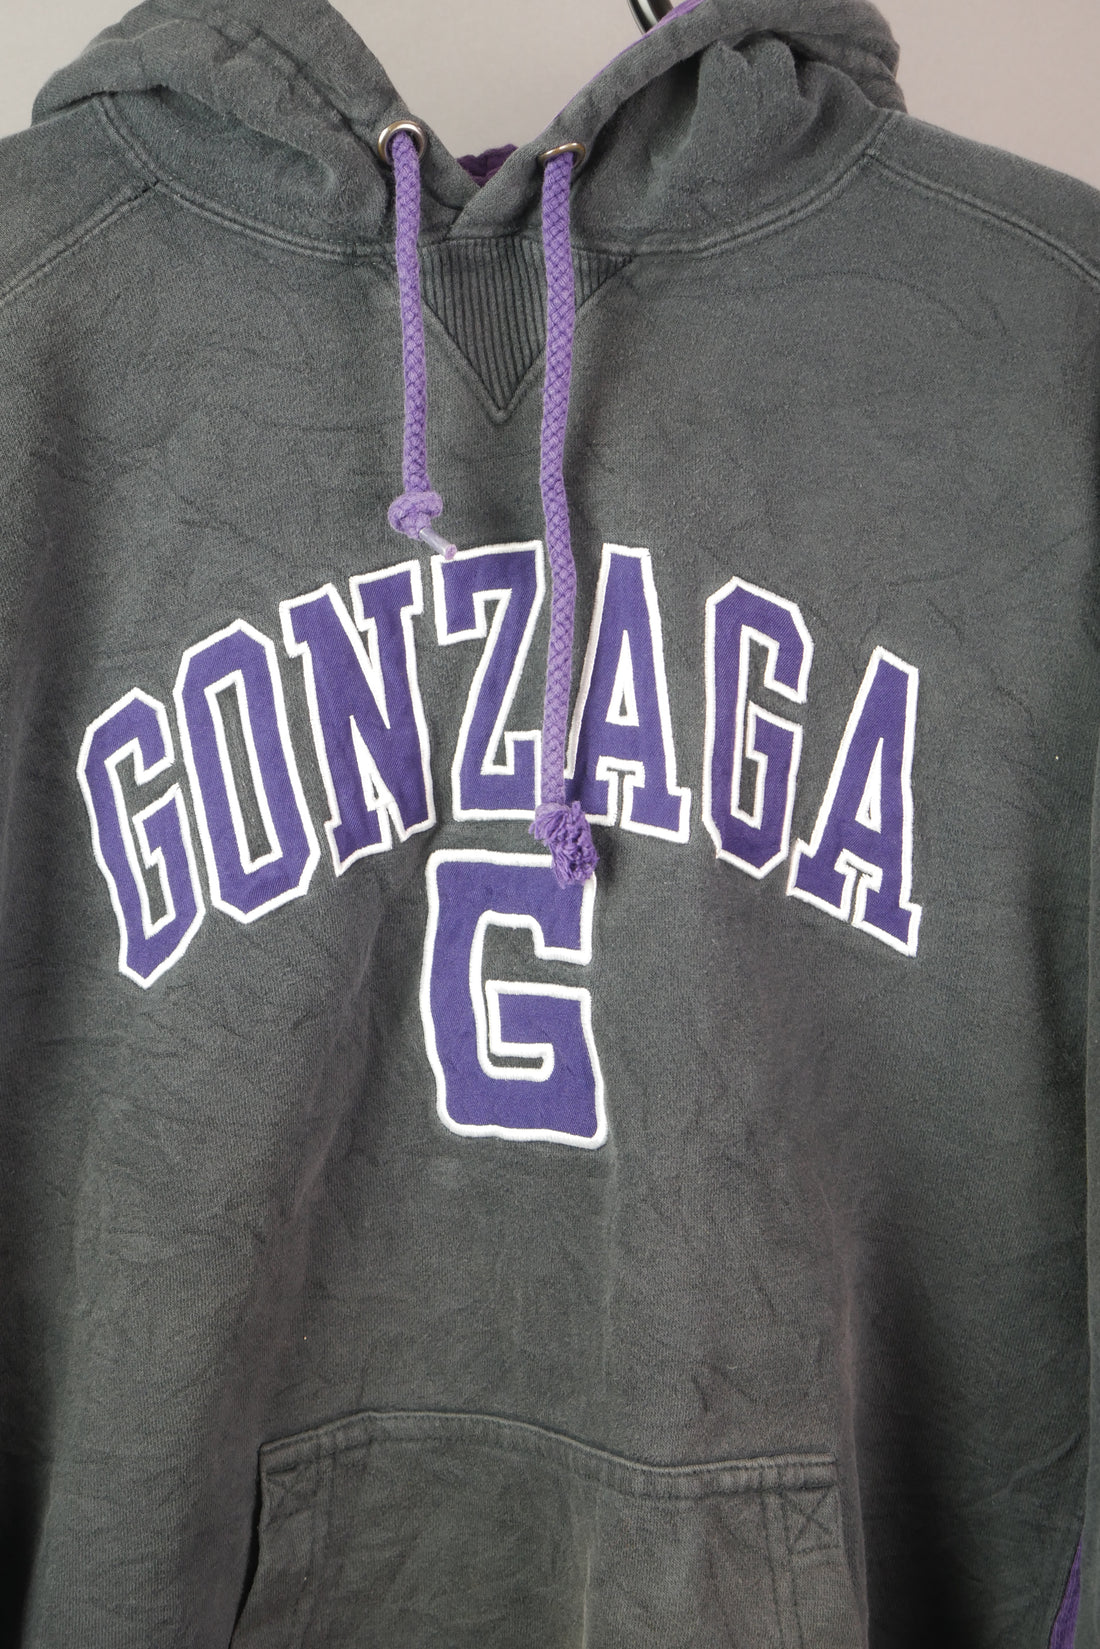 The Champion Gonzaga Sweatshirt (L)